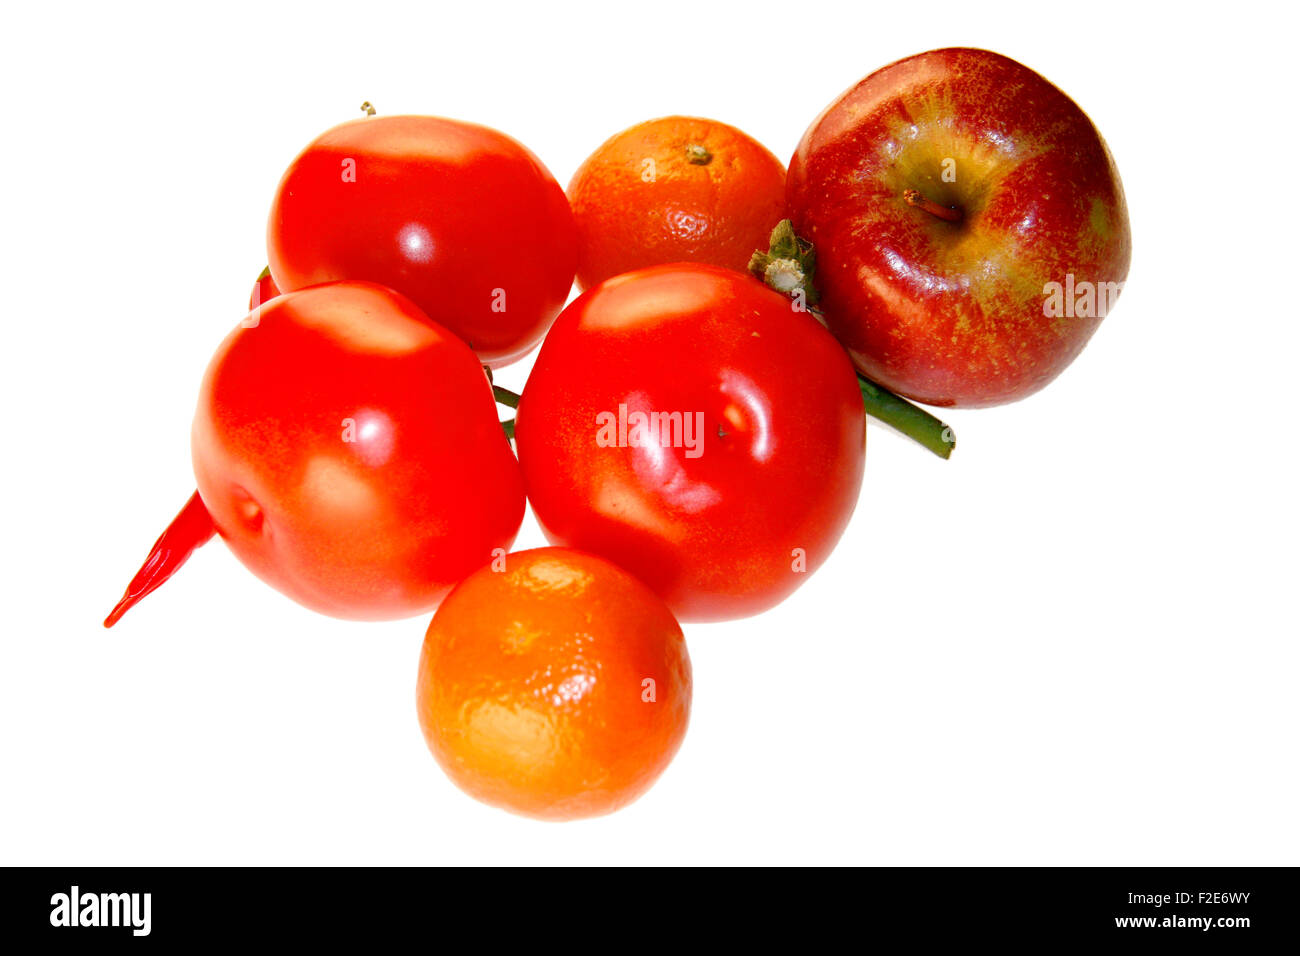 Obst/ gemuese: rote Chillyschote, Tomaten, Mandarinen, Apfel - Symbolbild Nahrungsmittel . Stock Photo